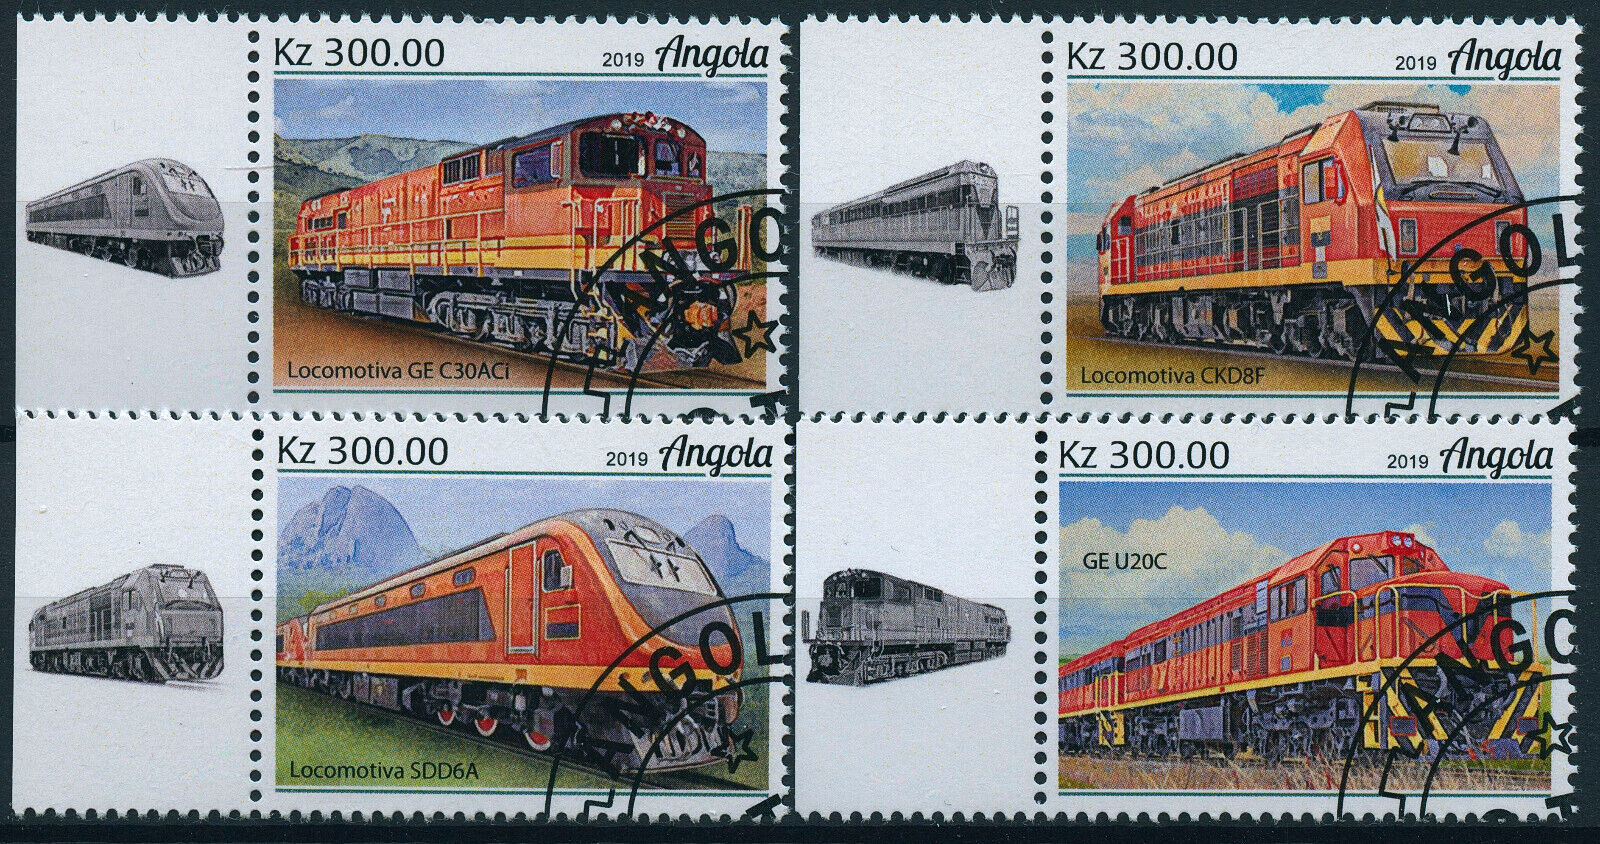 Angola 2019 CTO Trains Stamps Locomotives SDD6A CKD9F Railways Rail 4v Set